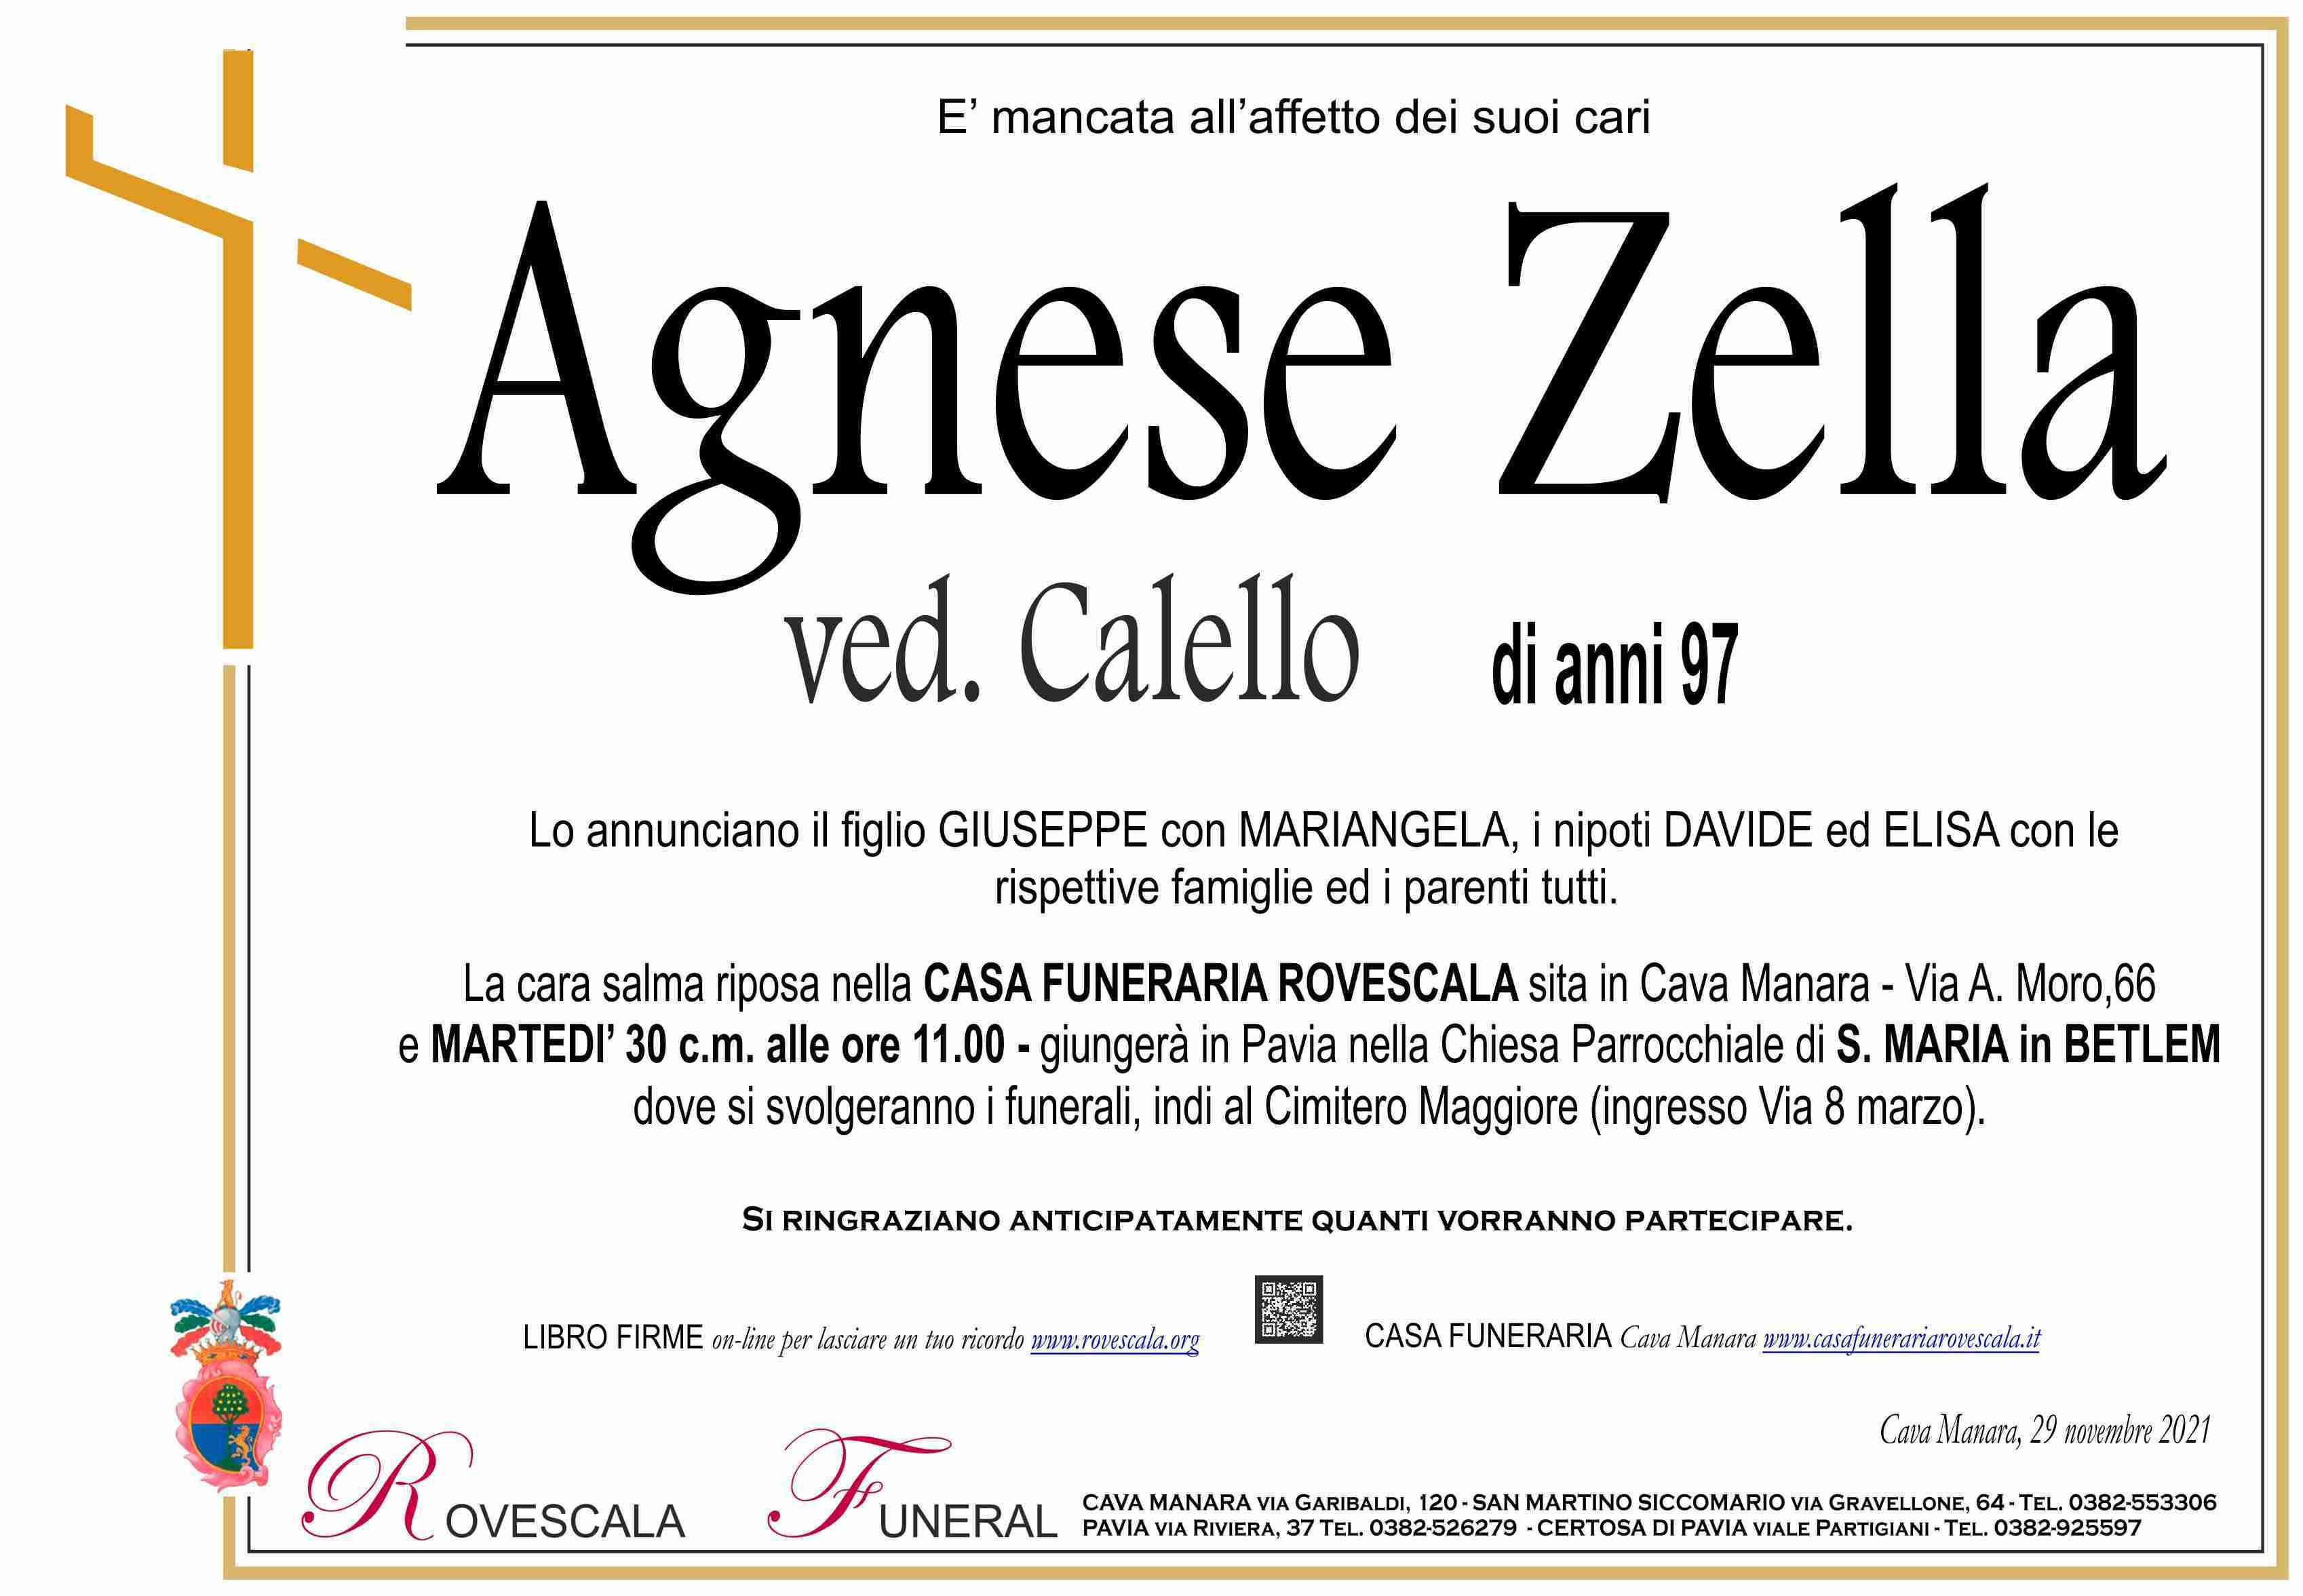 Agnese Zella